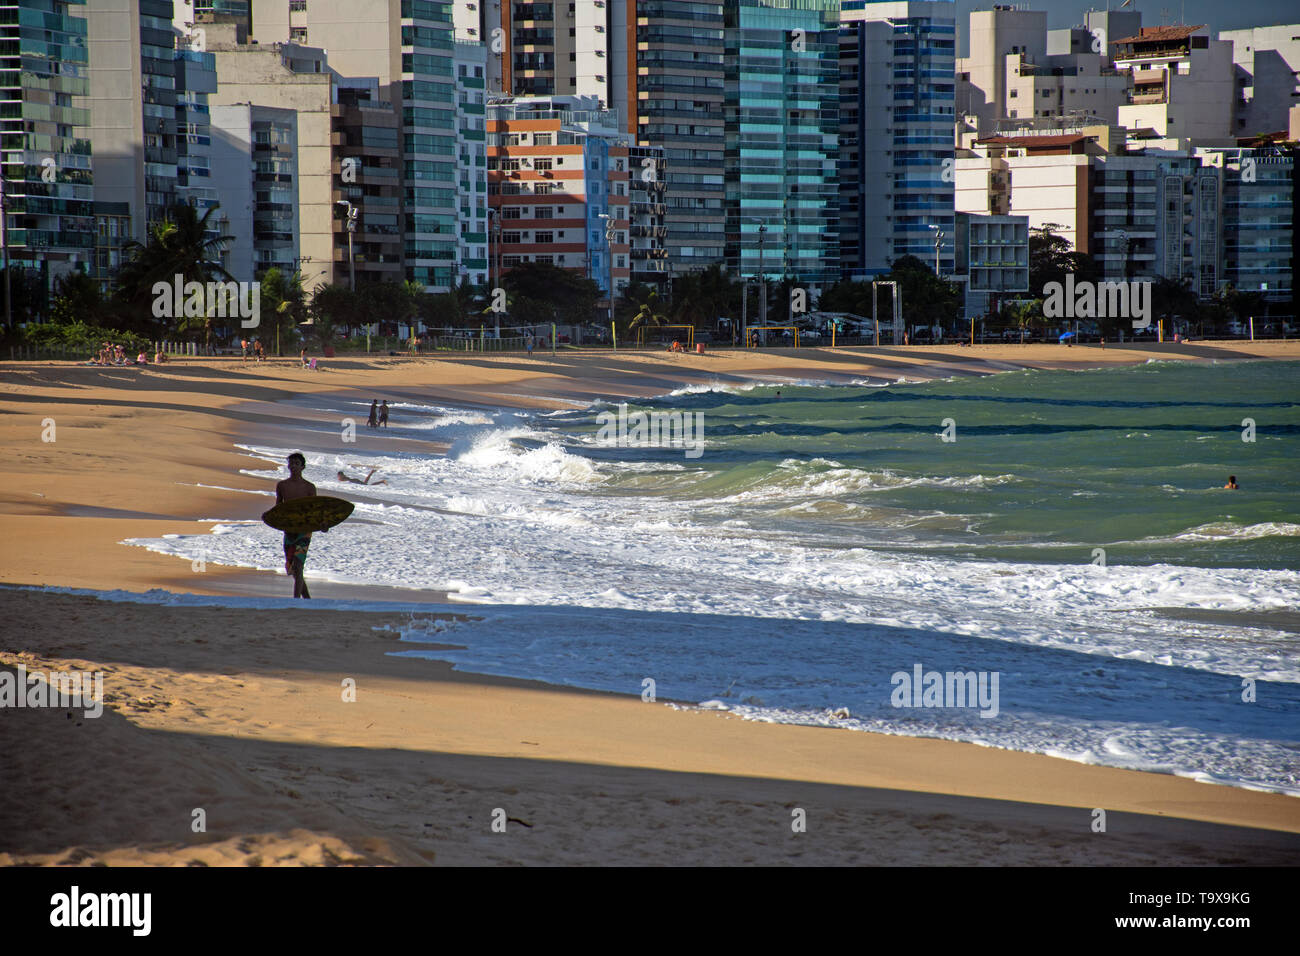 Sand surfer enjoys an urban beach, Praia da Costa, Vila Velha, Espirito Santo, Brazil Stock Photo